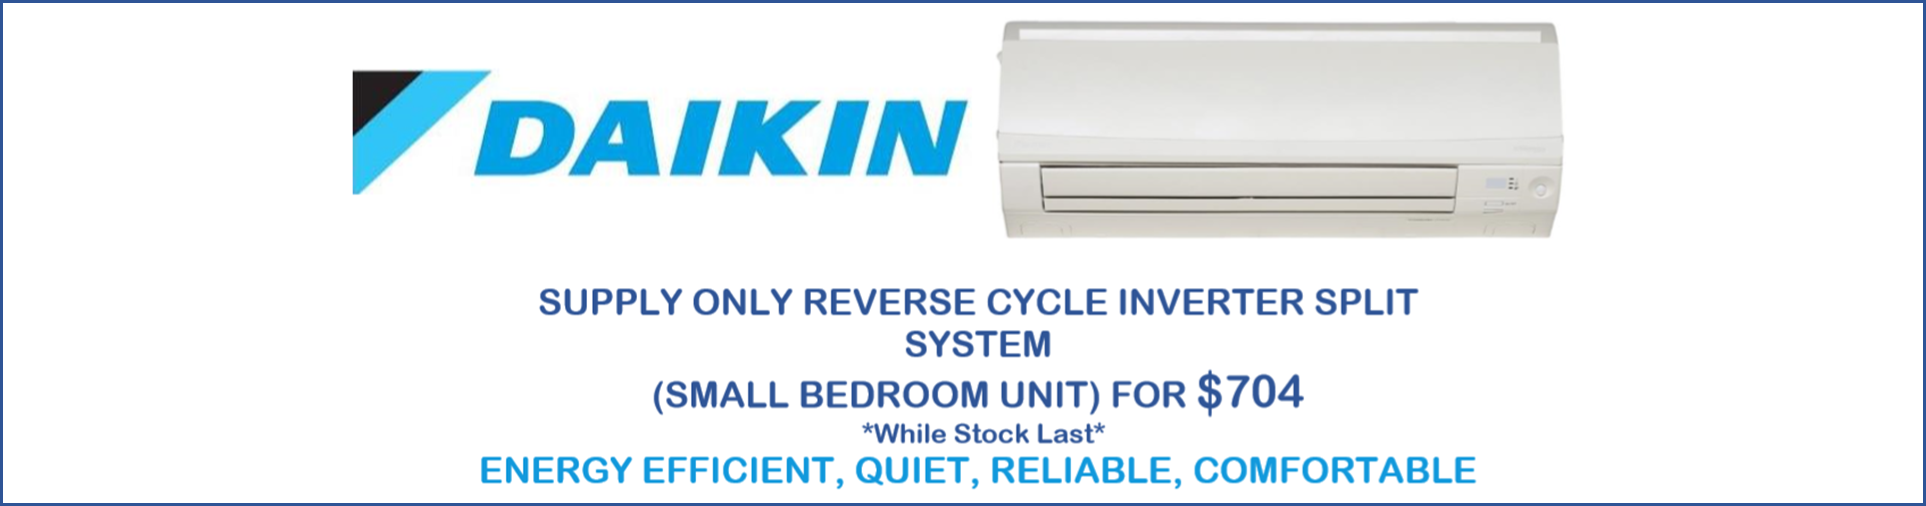 Daikin reverse cycle air conditioner sale